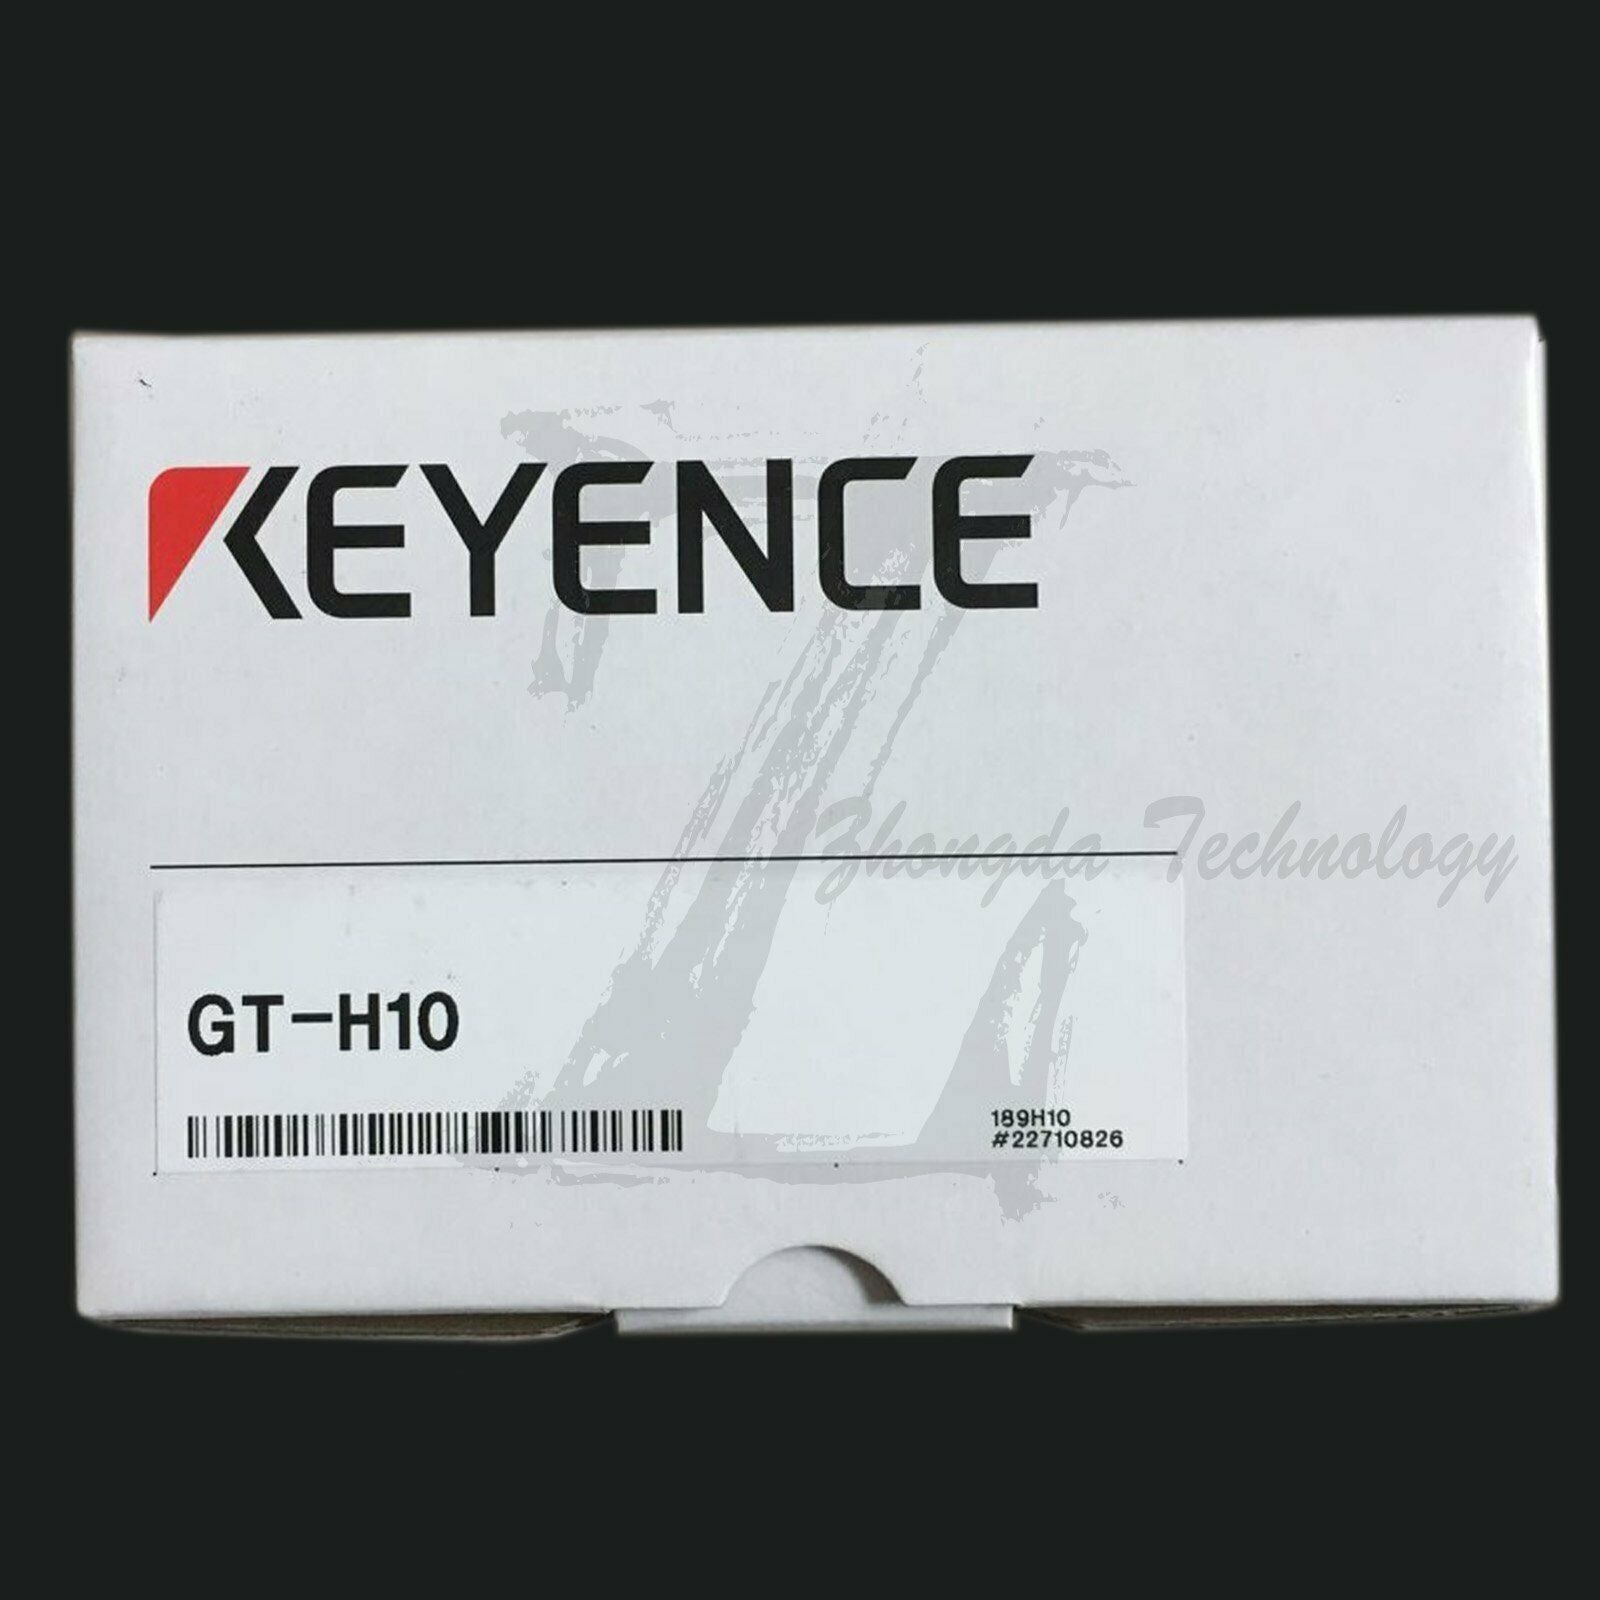 NEW IN BOX 1PCS Keyence High Accuracy Contact Sensor GT-H10